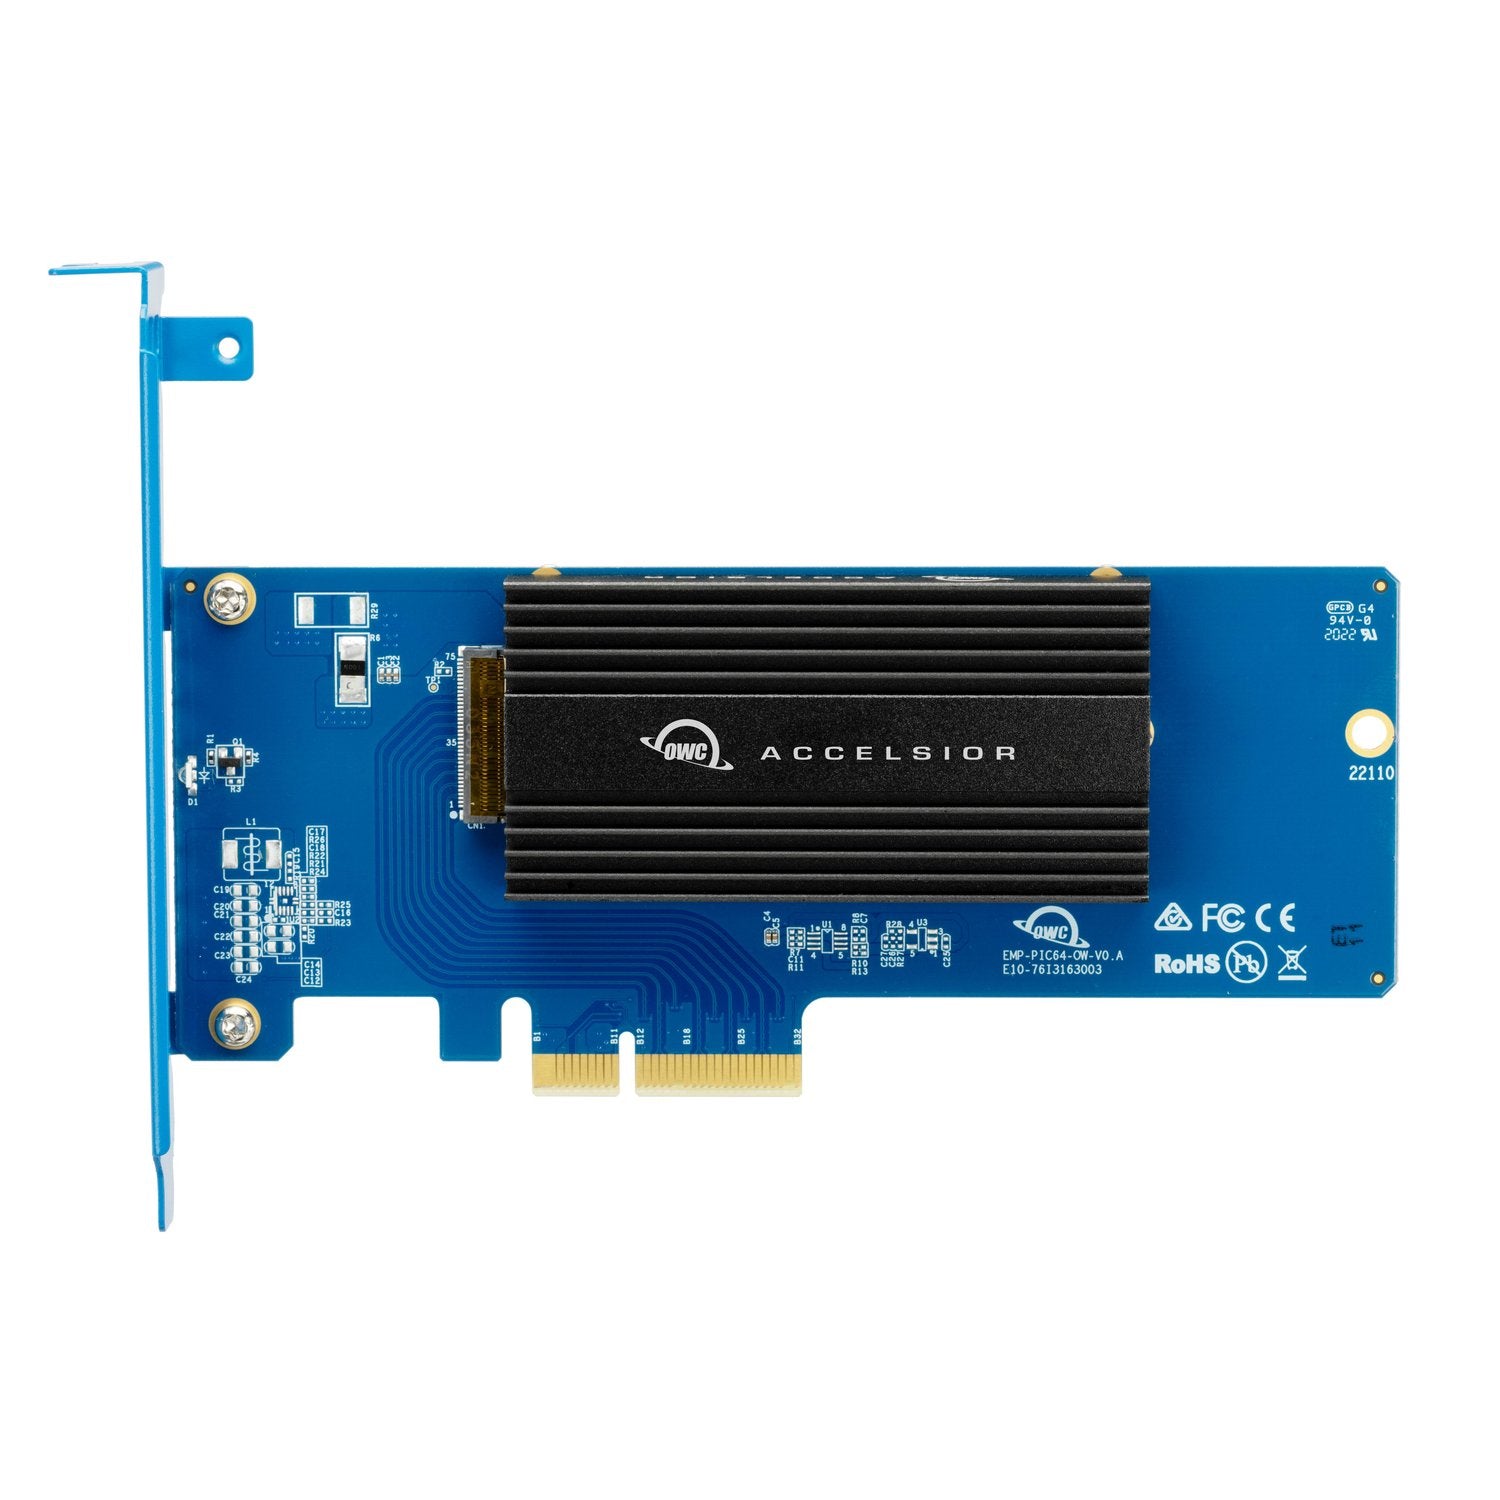 OWC Accelsior 1M2 PCIe NVMe M.2 SSD Card